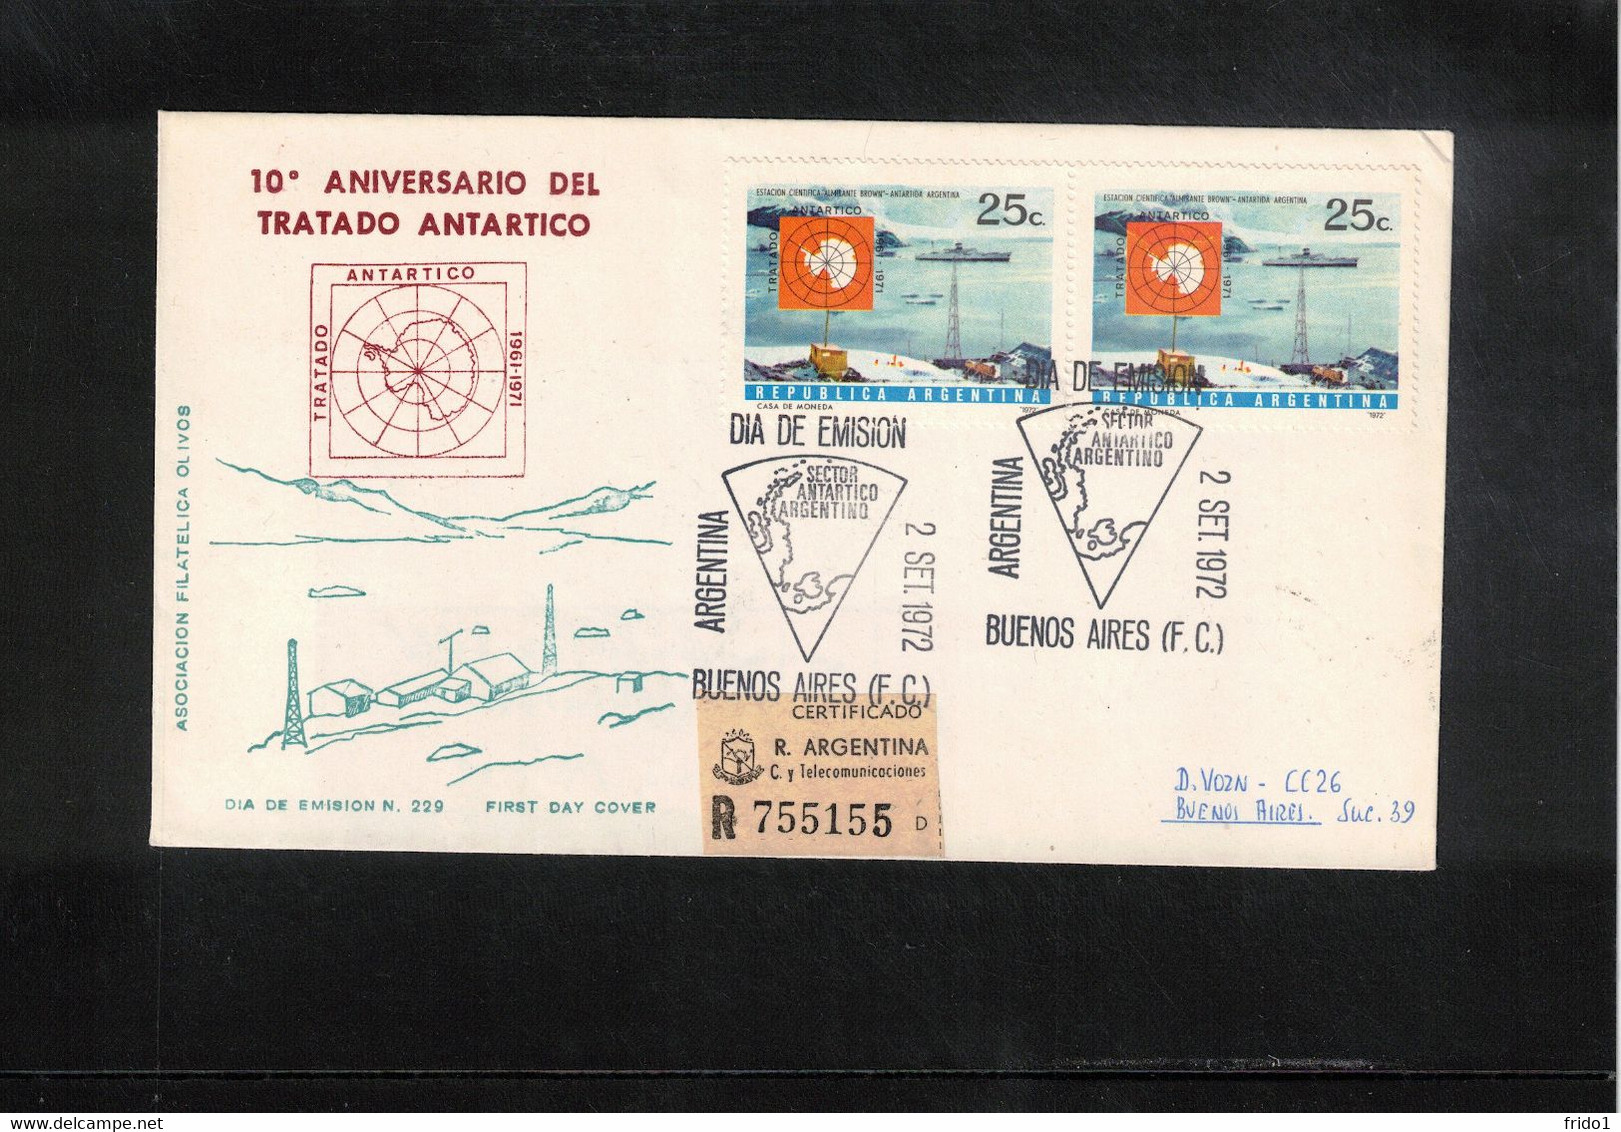 Argentina 1972 10th Anniversary Of Antarctica Treaty Interesting Registered Letter - Tratado Antártico